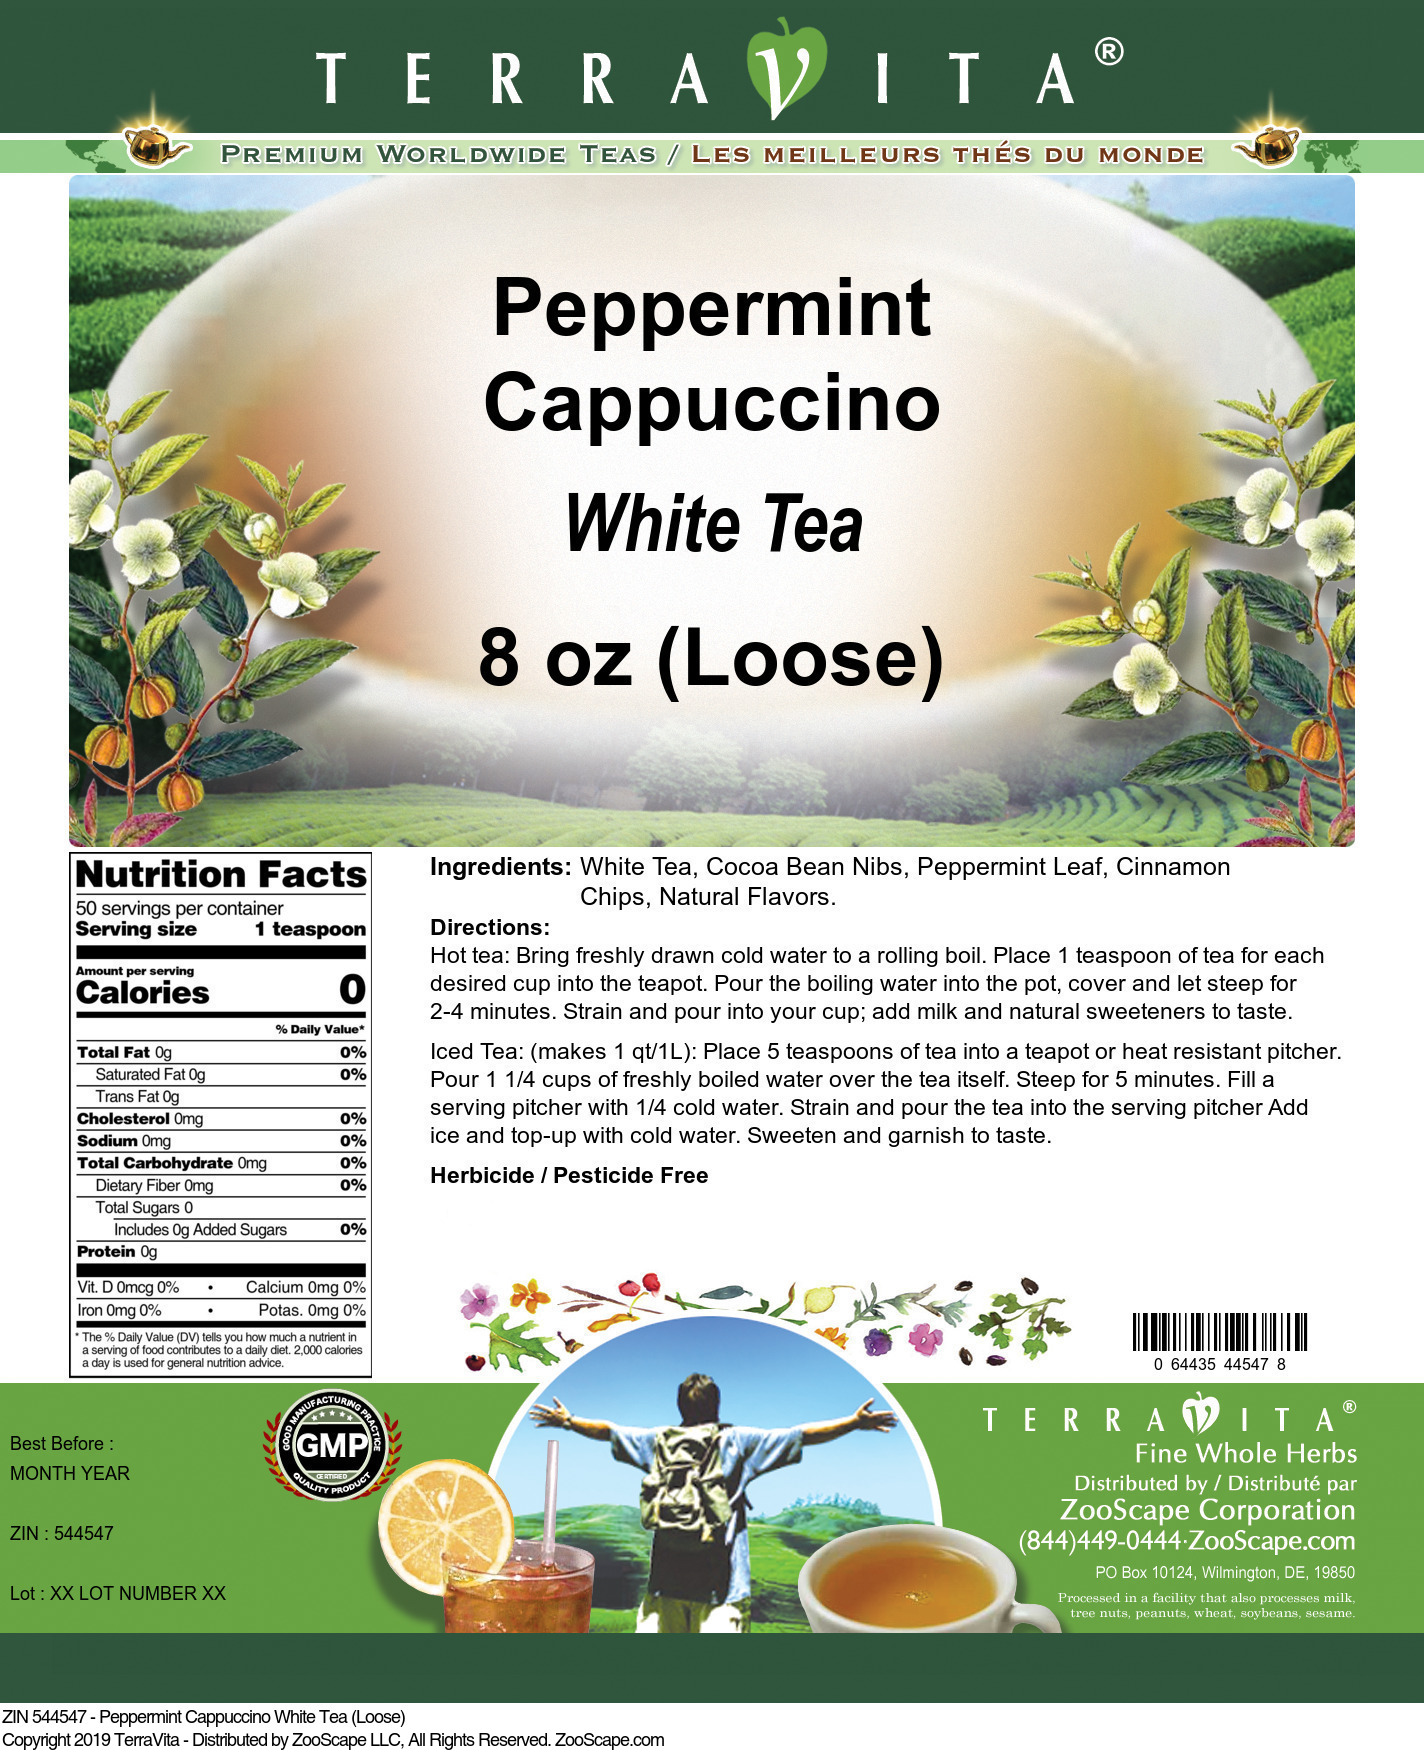 Peppermint Cappuccino White Tea (Loose) - Label